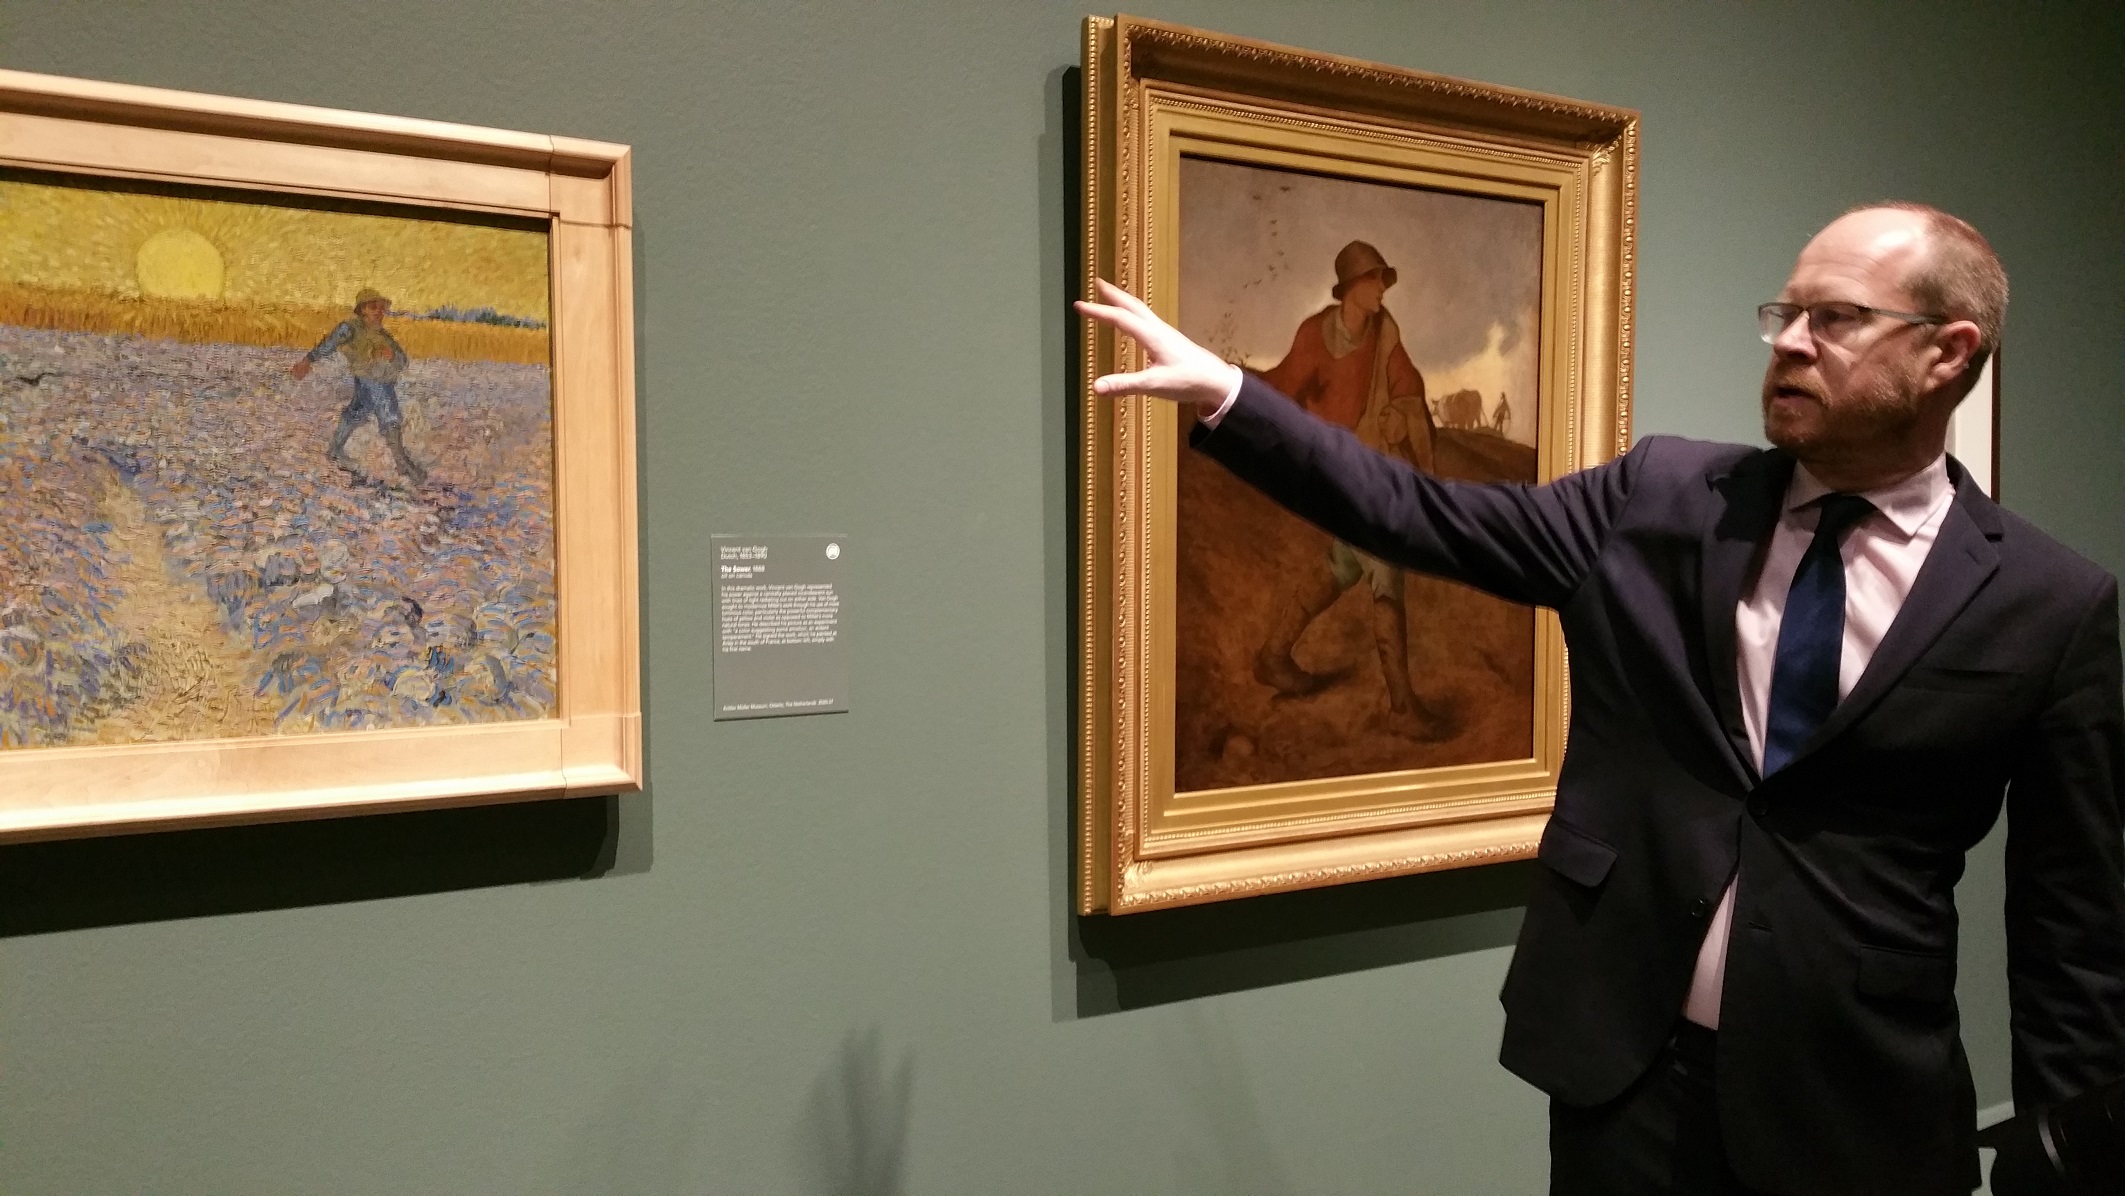 Vincent van Gogh - The Sower - Van Gogh Museum